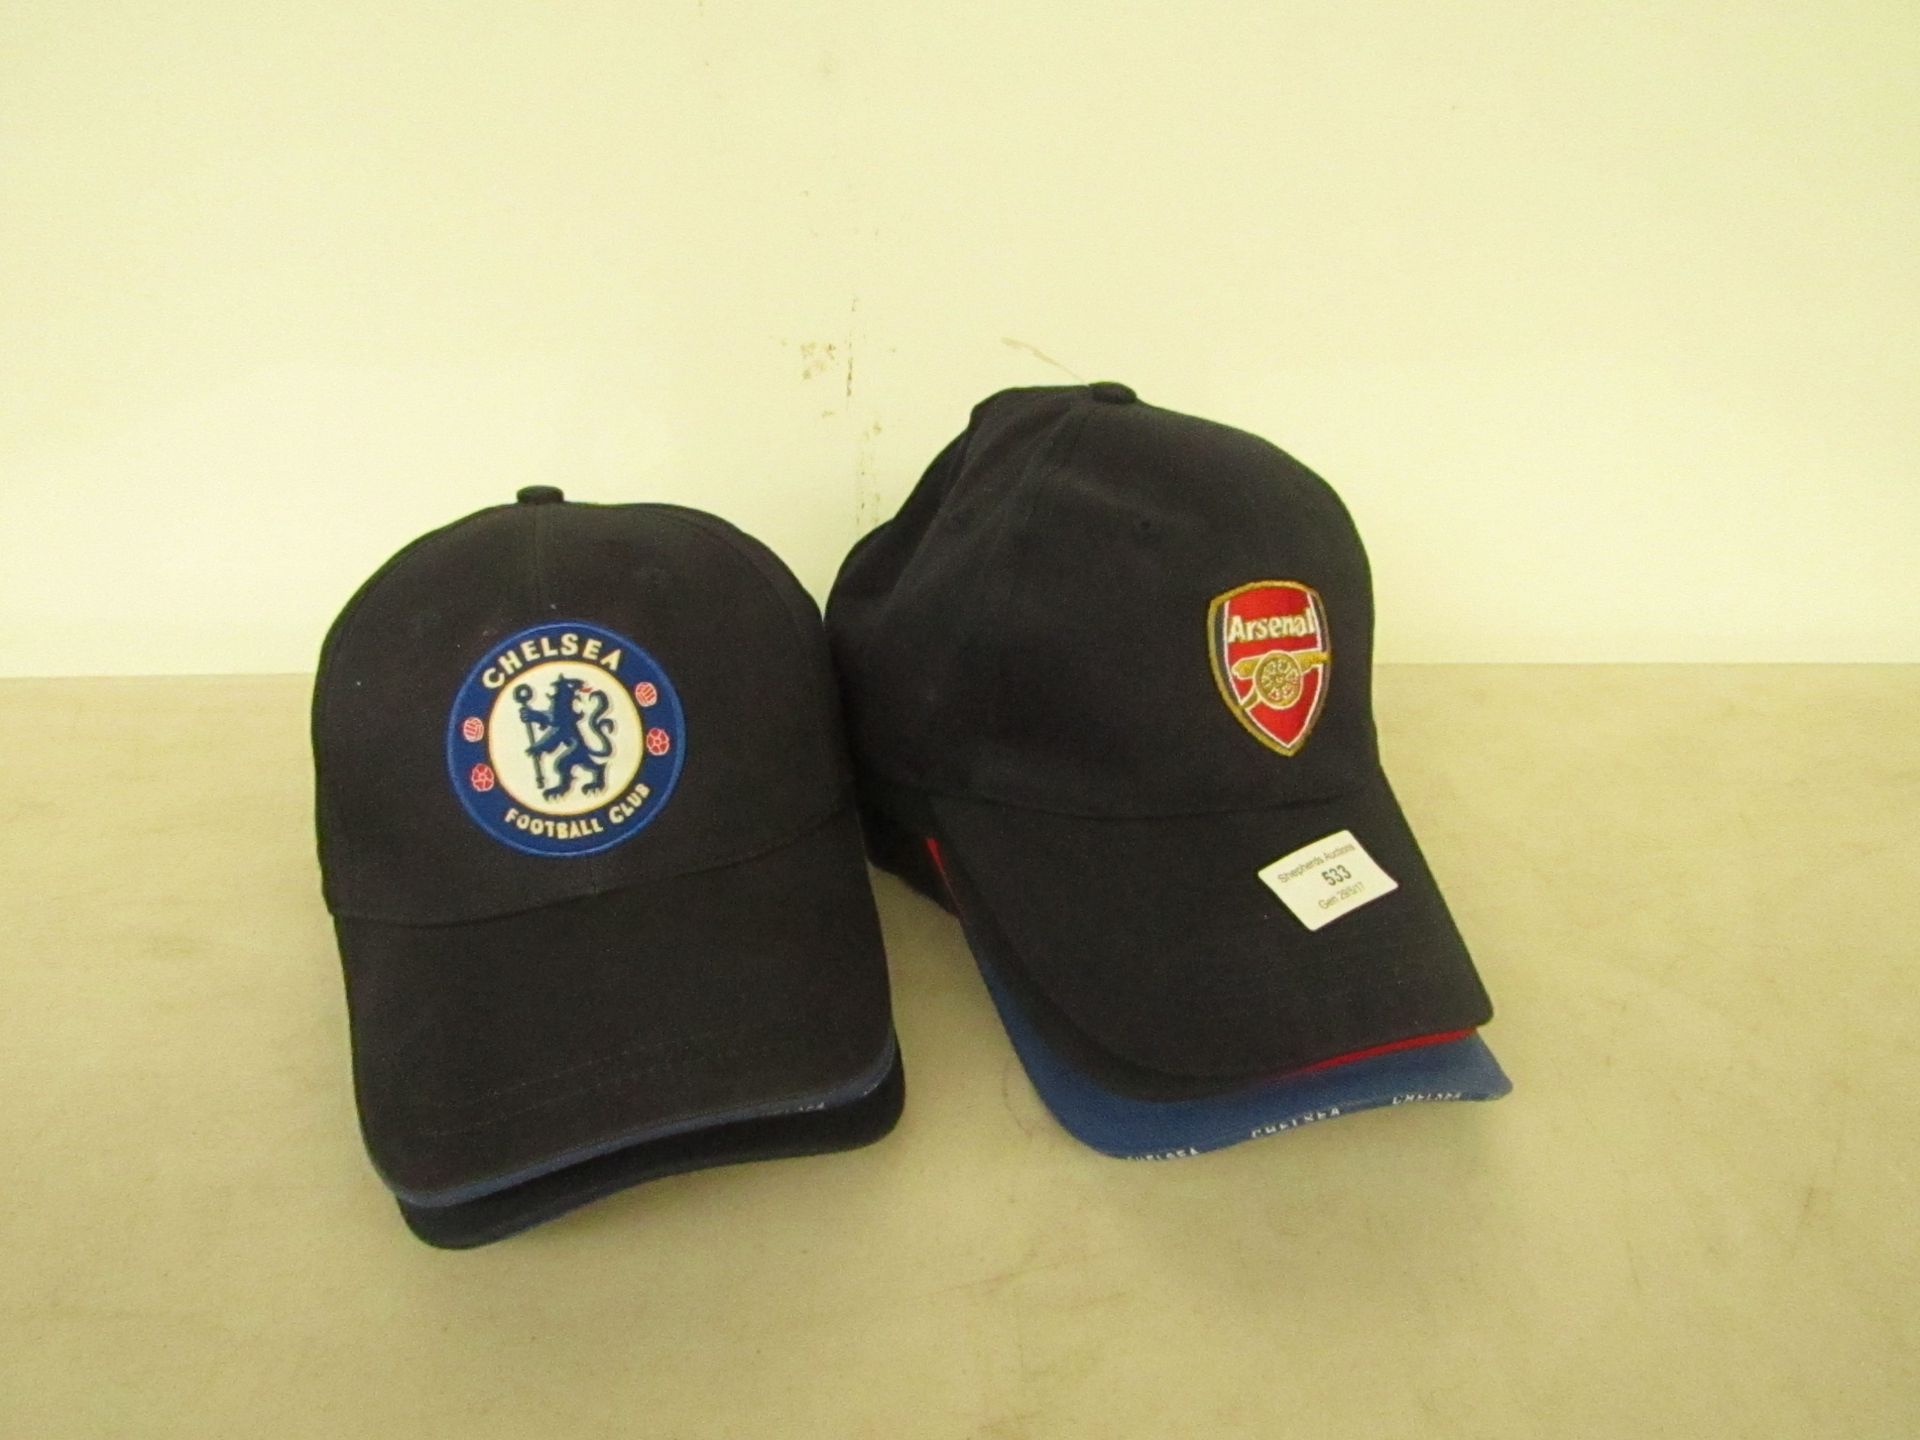 6x Football Club Caps (4x Chelsea & 2x Chelsea).